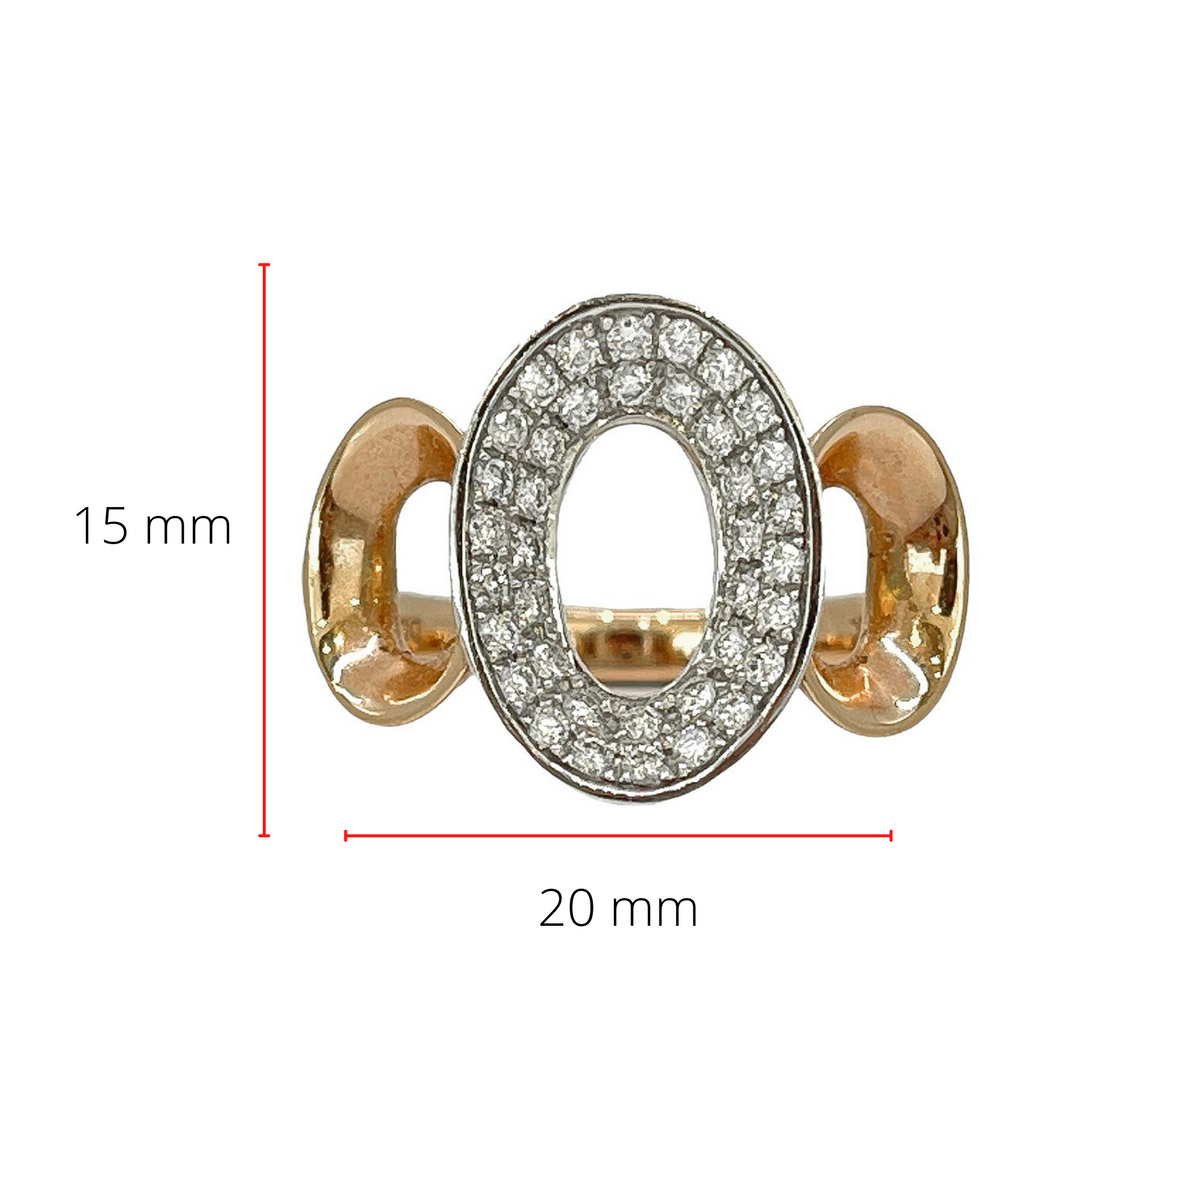 14K Rose Gold 0.31cttw Diamond Ring, Size 7